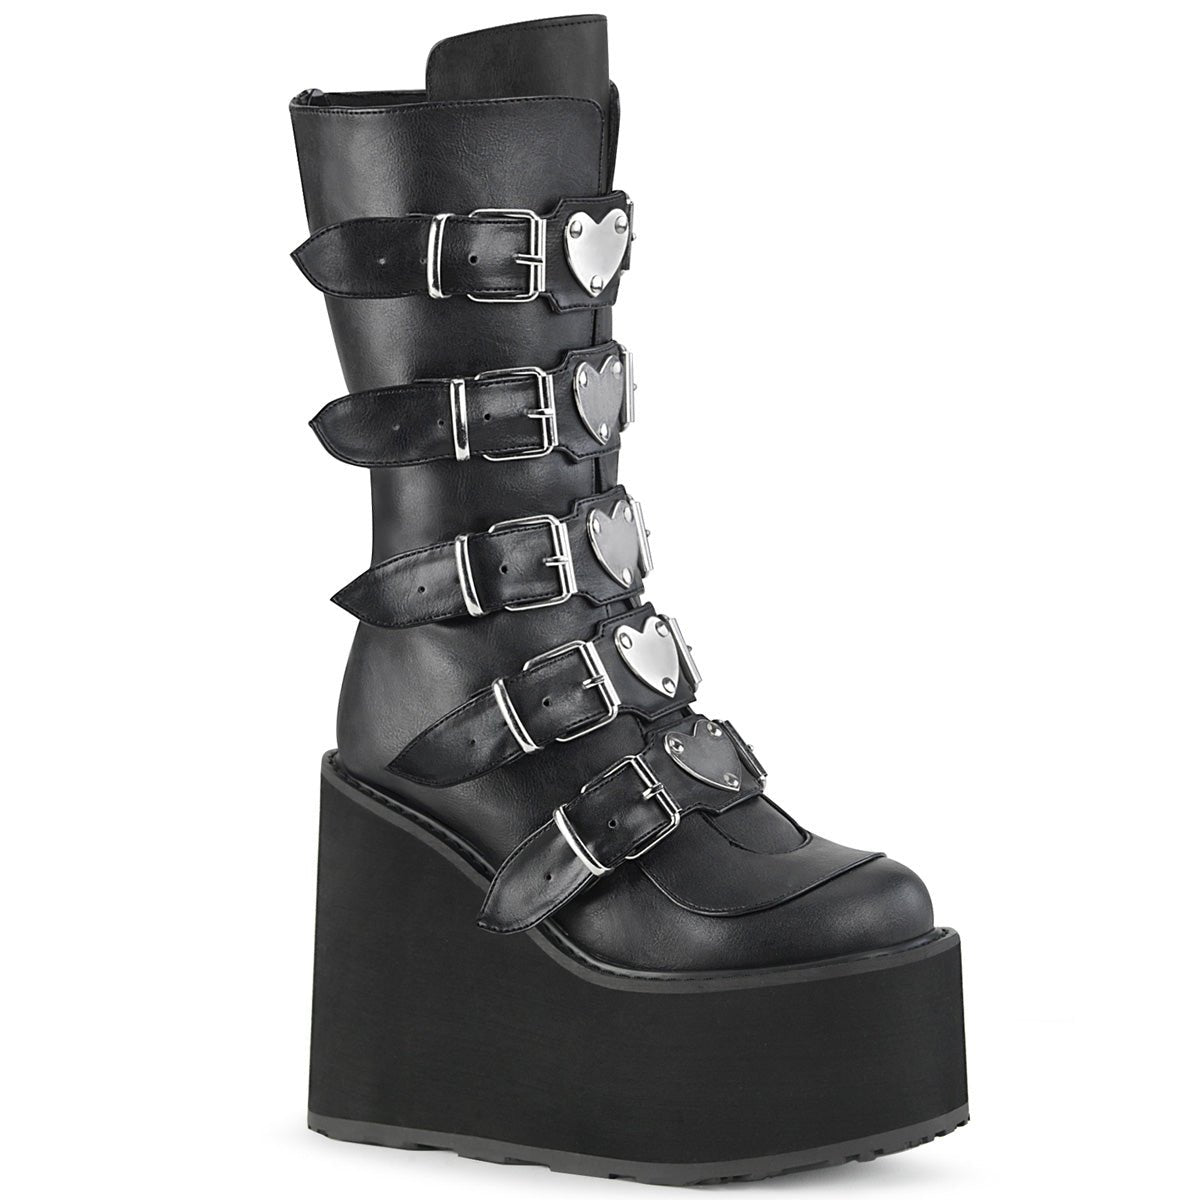 Too Fast | Demonia SWING-230 Black Vegan Leather Knee High Boots